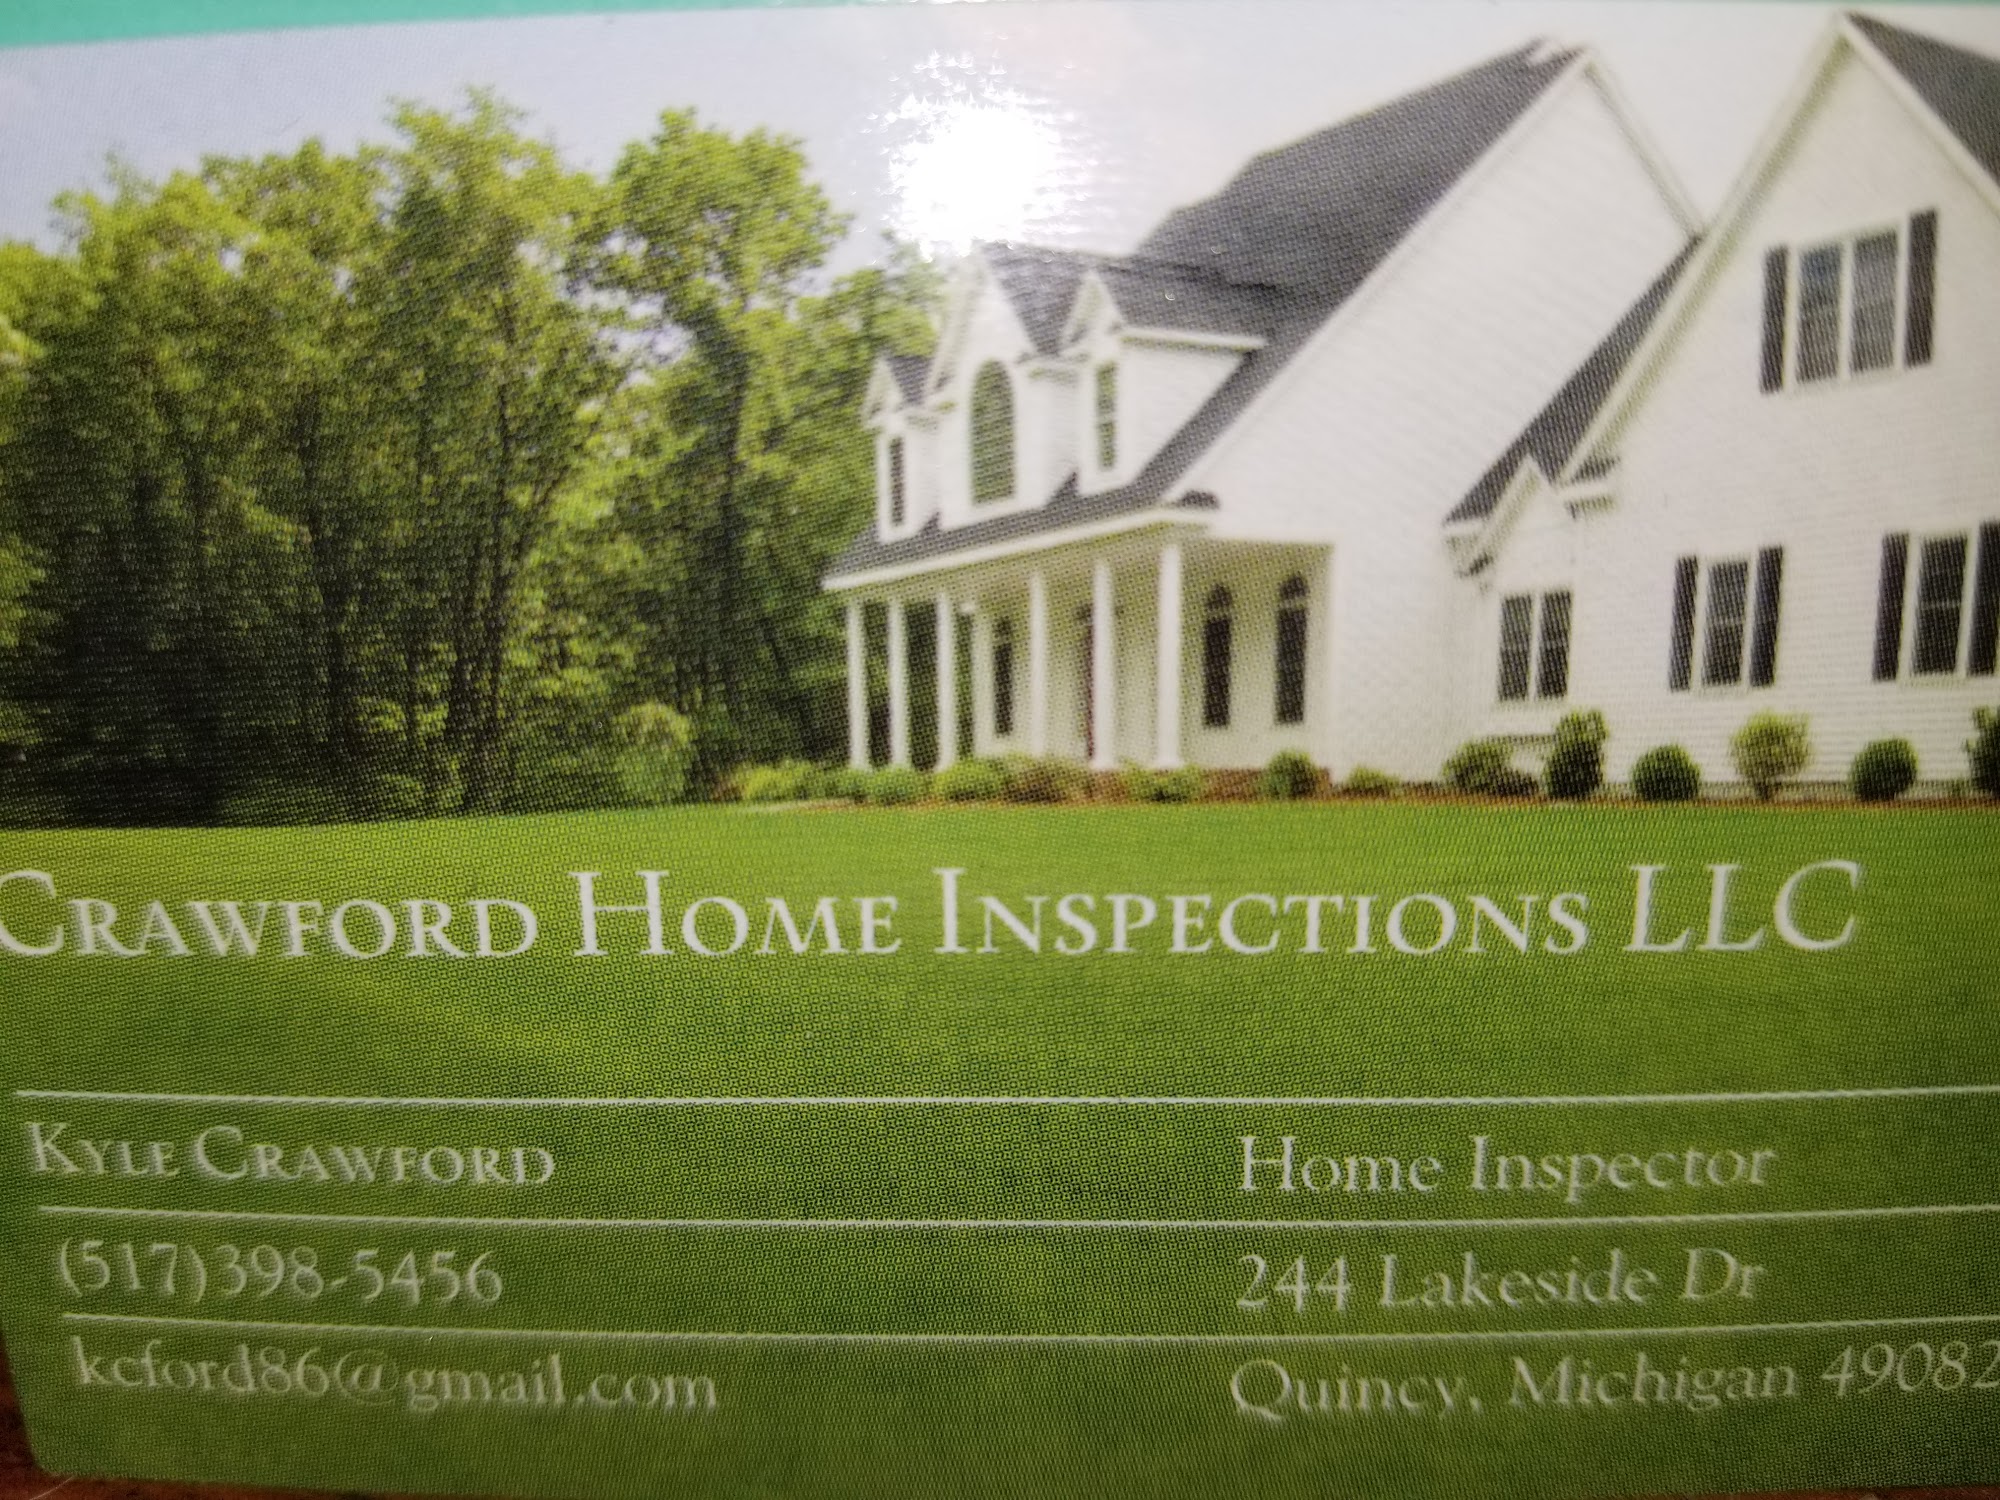 Crawford Home Inspections LLC 109 Craun's Beach Dr, Quincy Michigan 49082